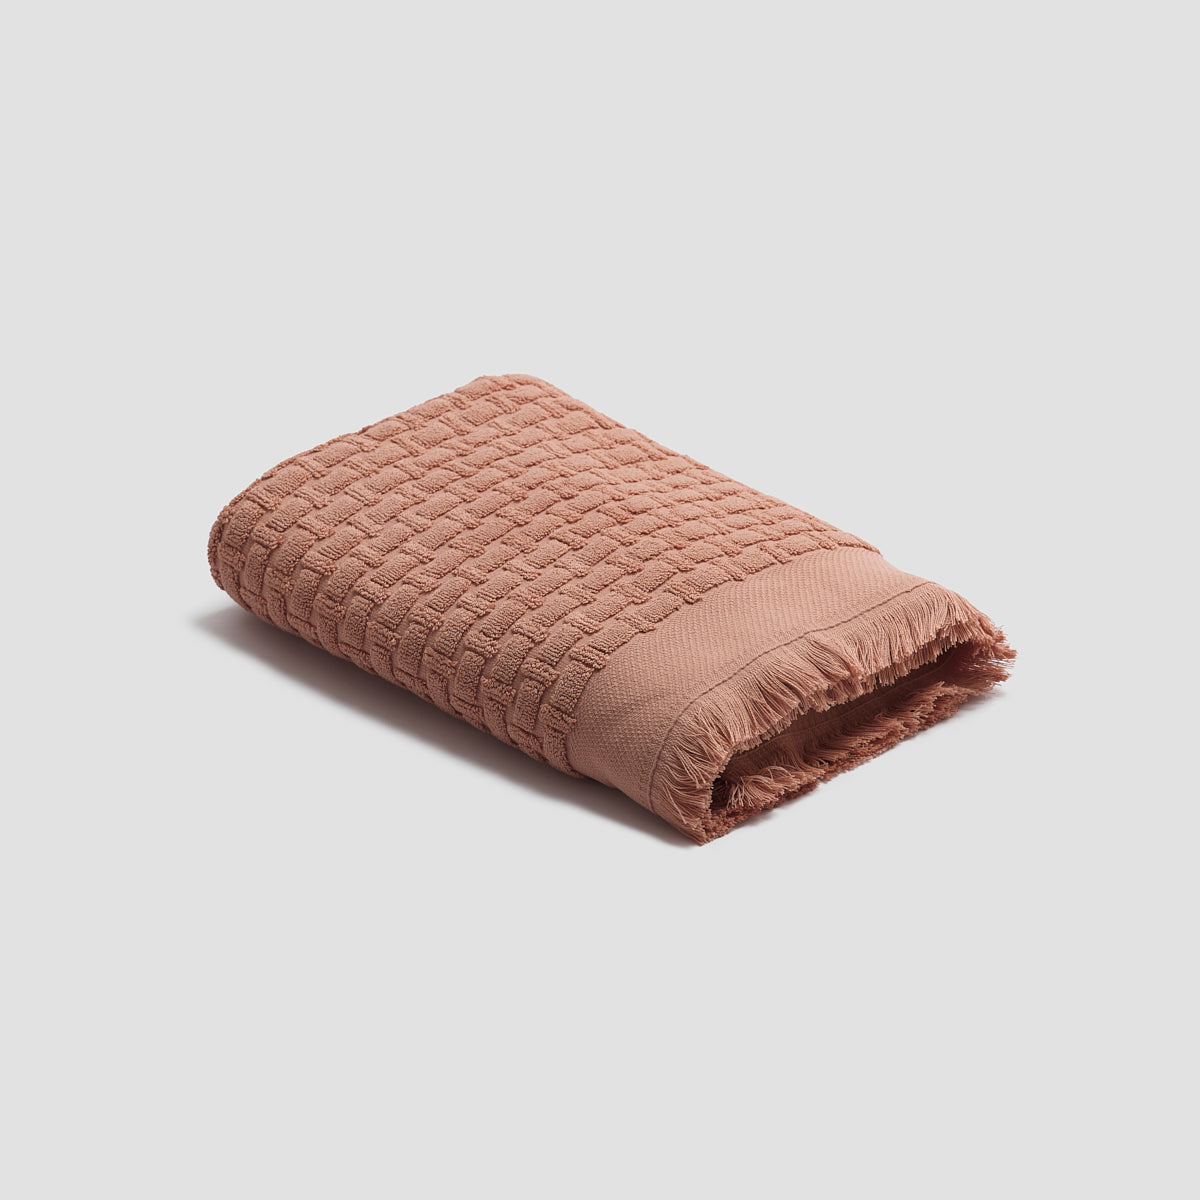 Creme Caramel Basketweave Cotton Bath Towel